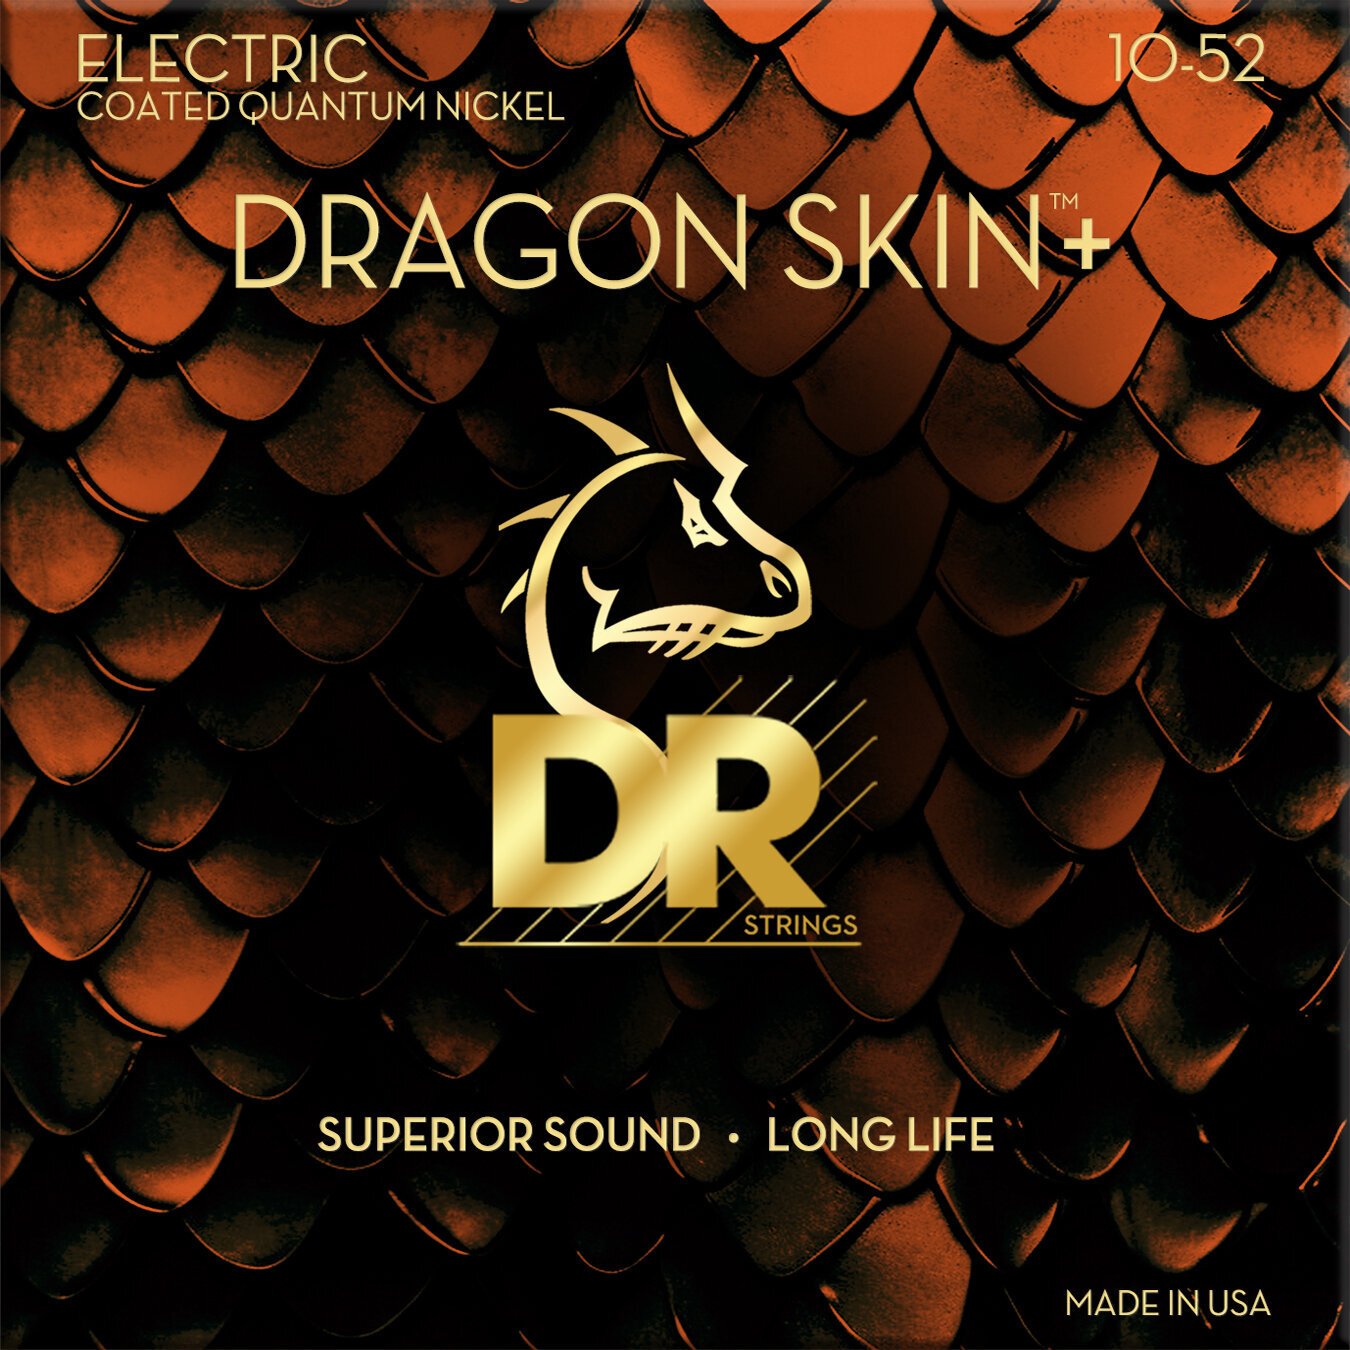 Struny pro elektrickou kytaru DR Strings Dragon Skin+ Coated Medium to Heavy 10-52